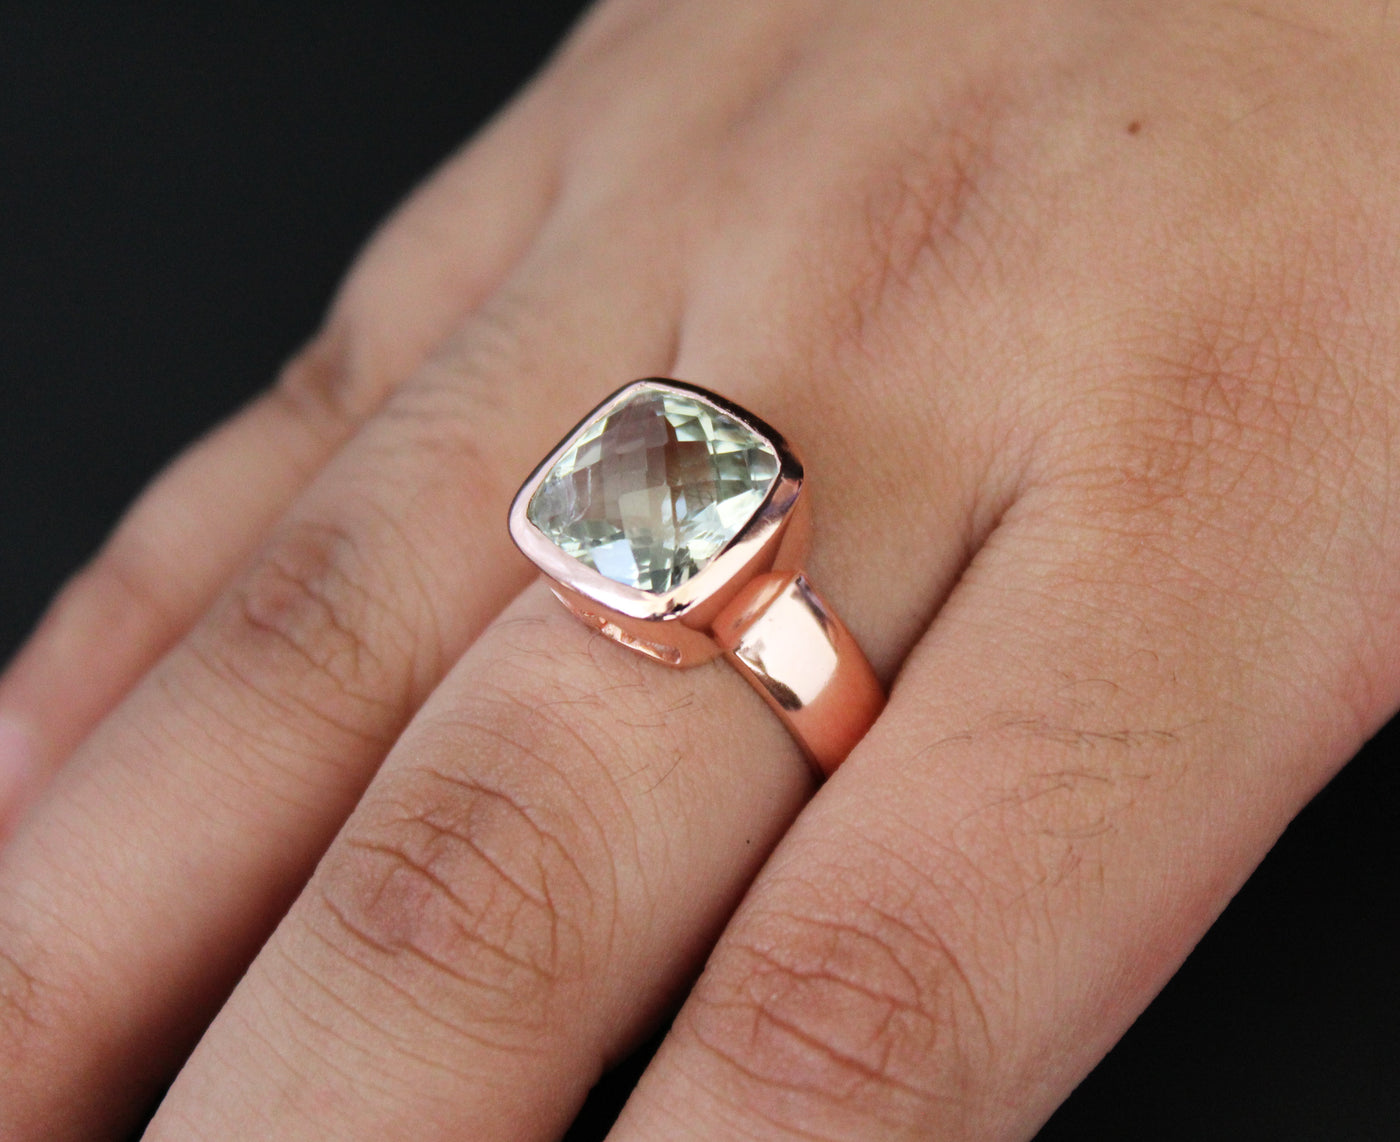 Green Amethyst Ring,Rose Gold Filled Ring,925 Silver Ring,Prasiolite Ring,Anniversary Gift,Bezel set ring,February Birthstone,Bridal jewelry